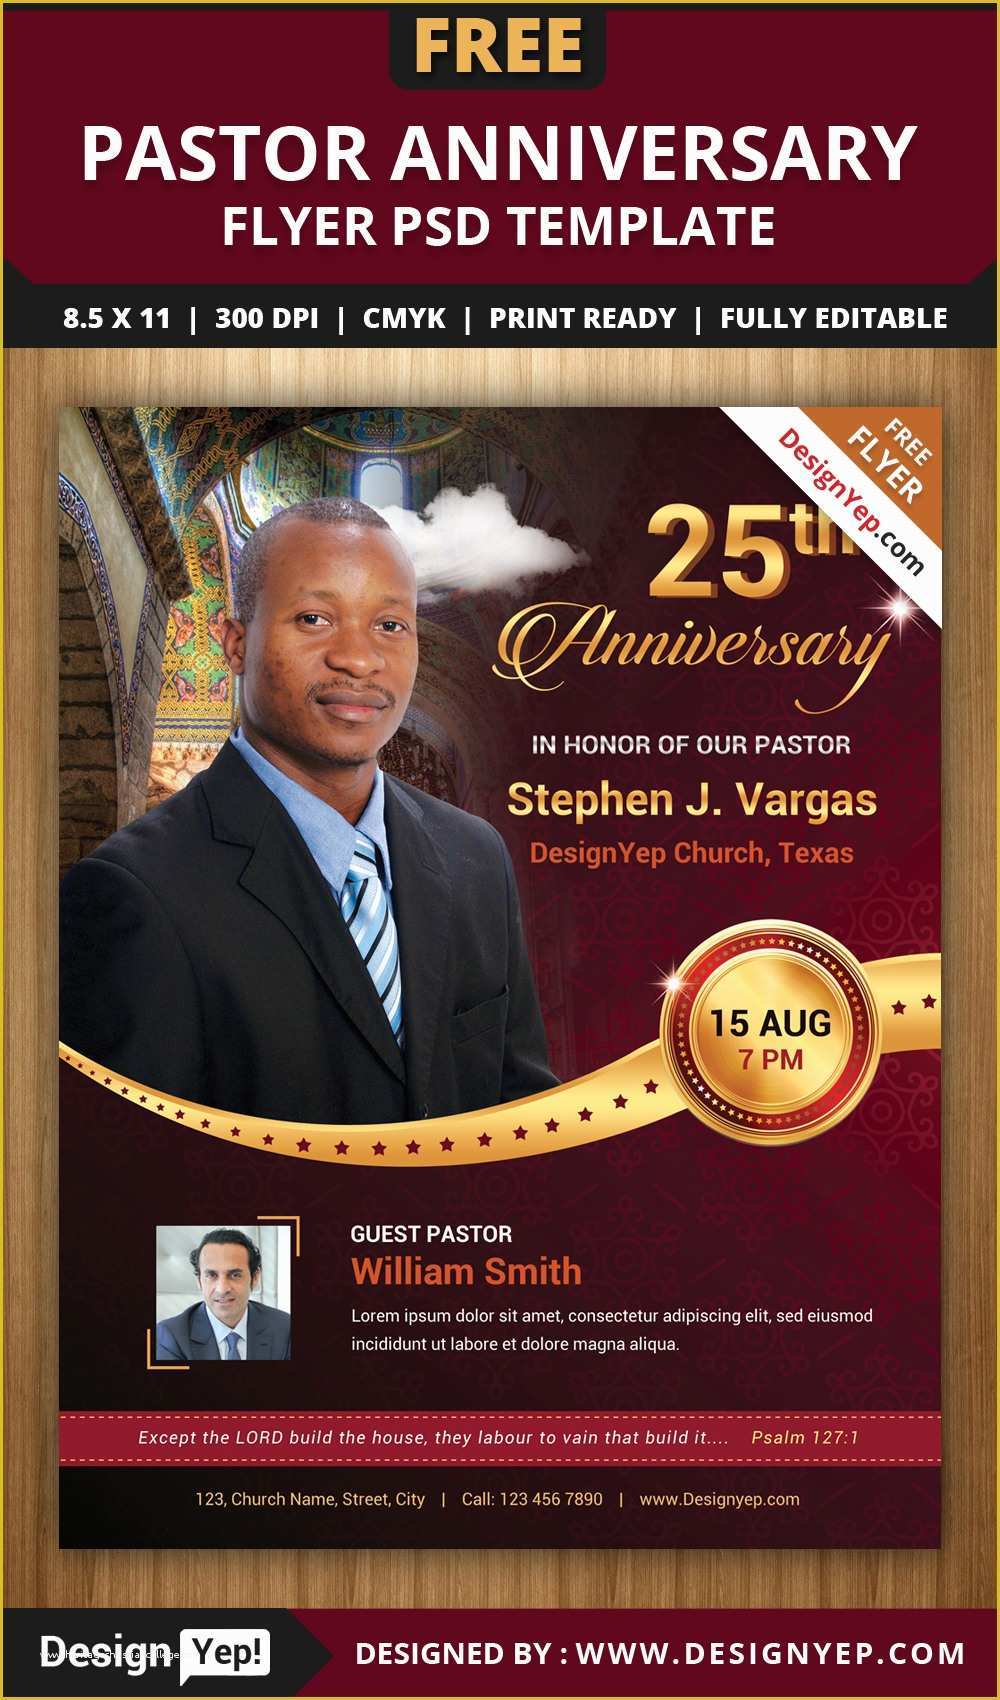 8.5 X 11 Flyer Template Free Of Free Pastor Anniversary Flyer Psd Template Designyep